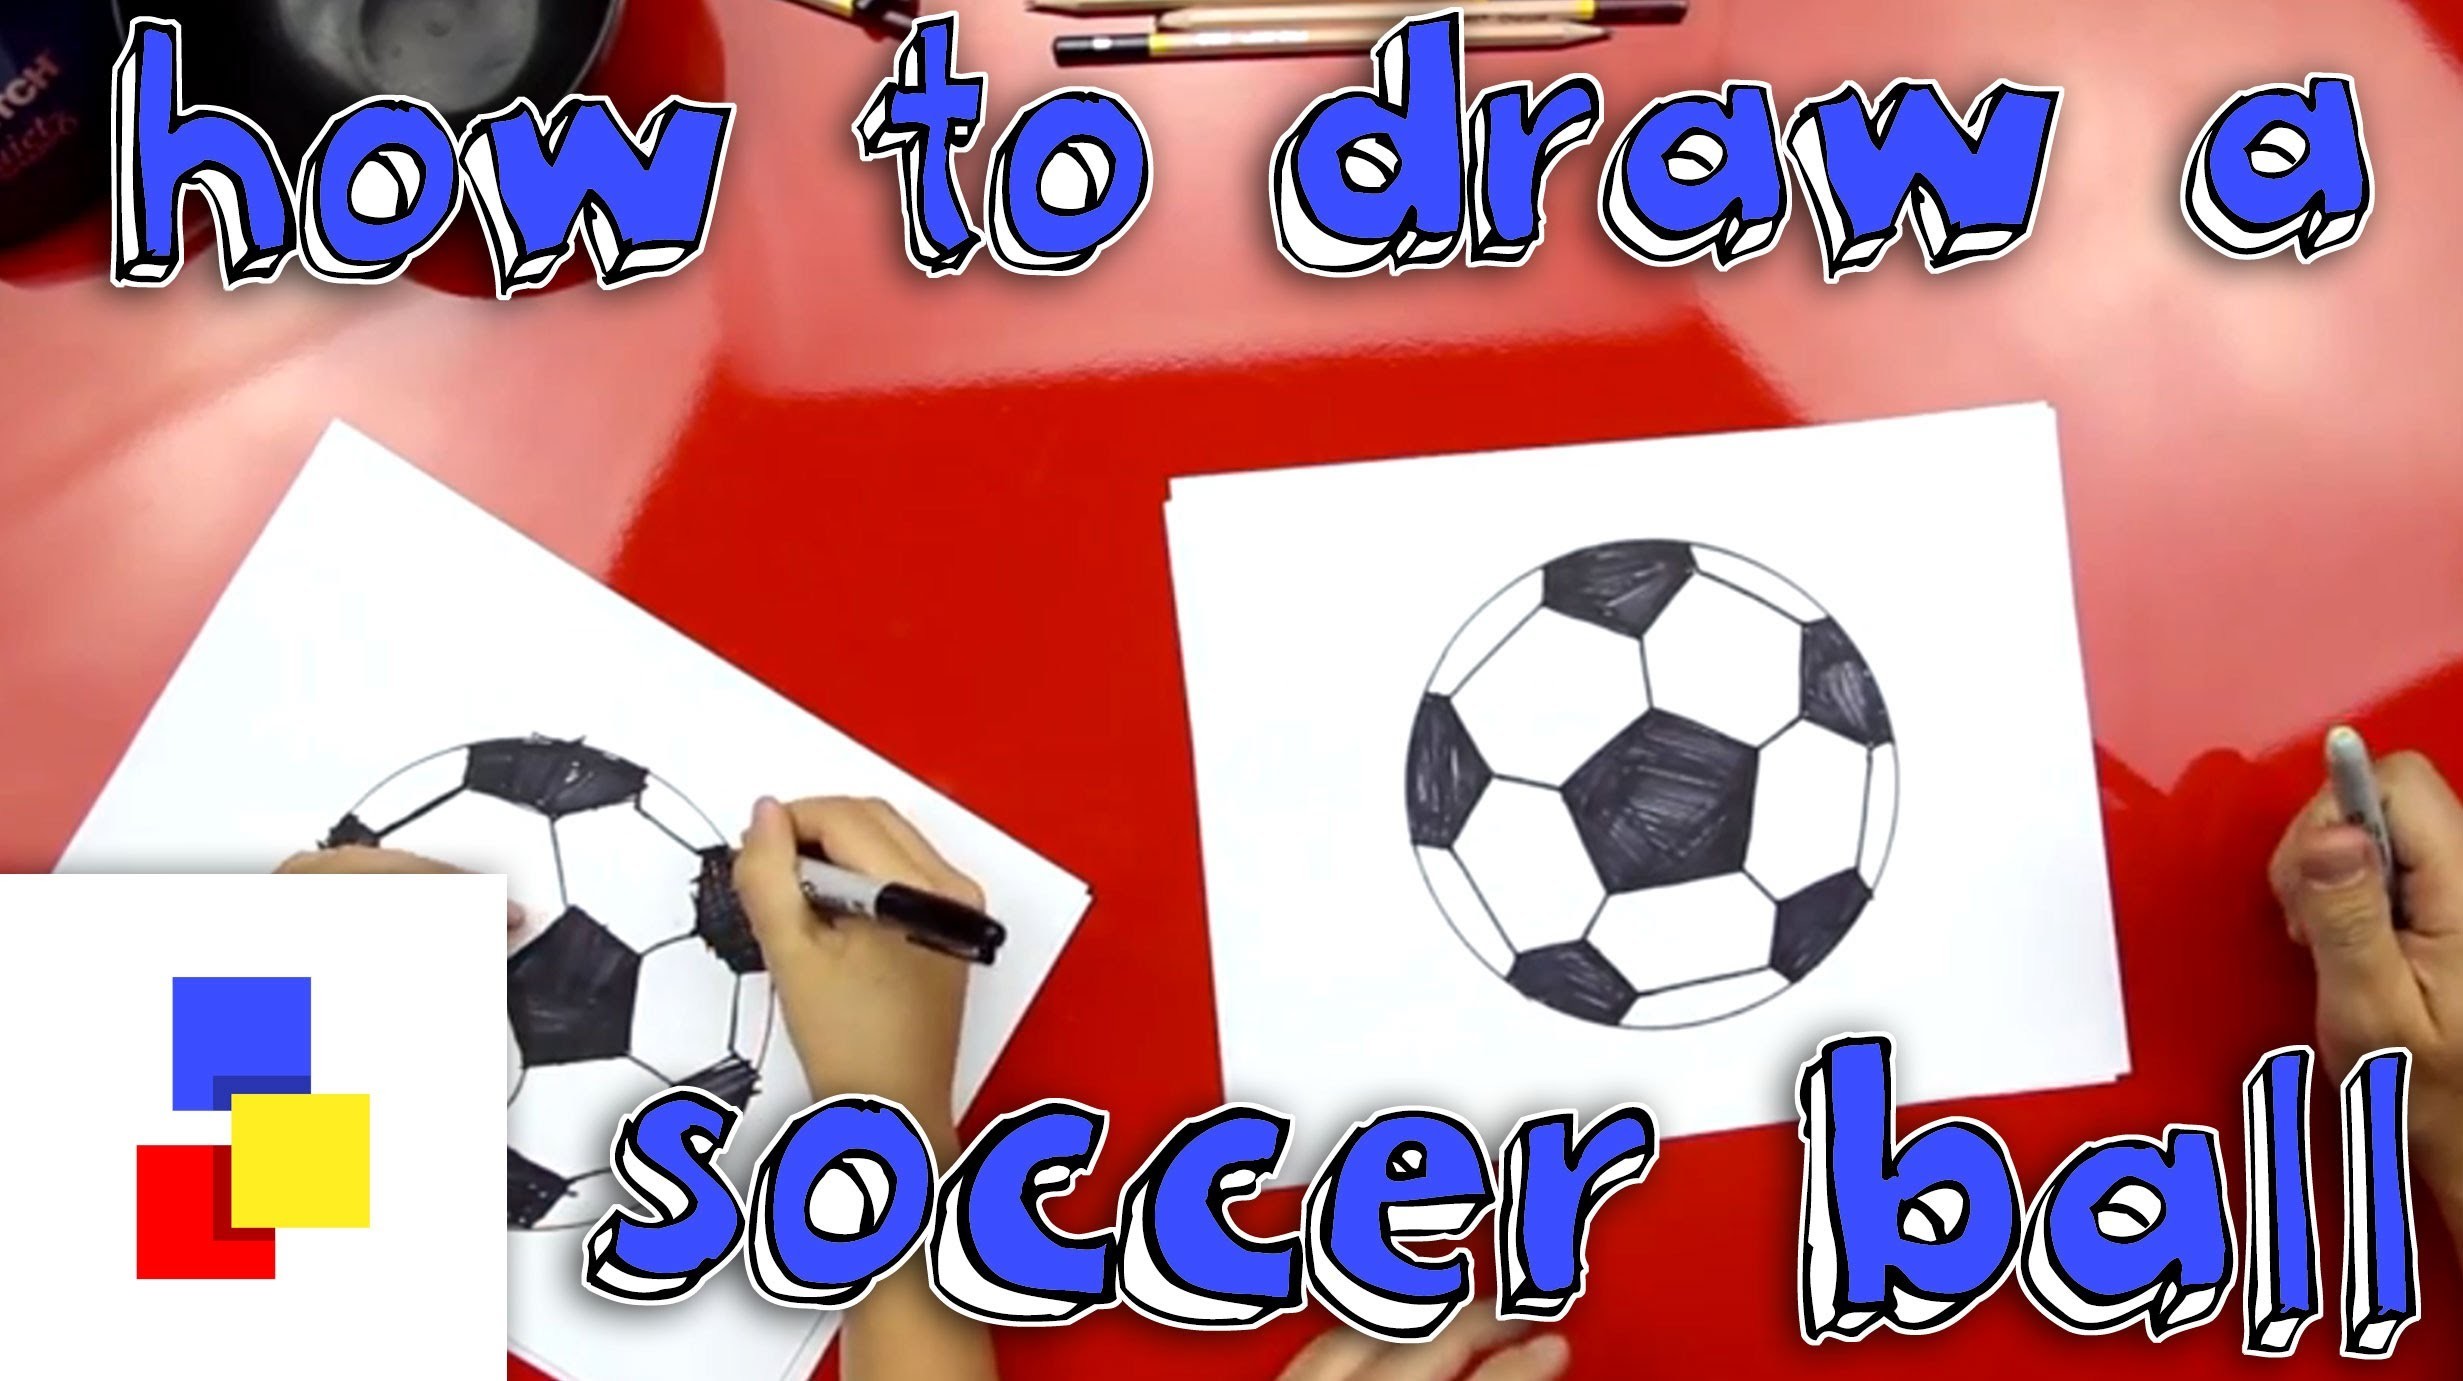 digital soccer draw serial